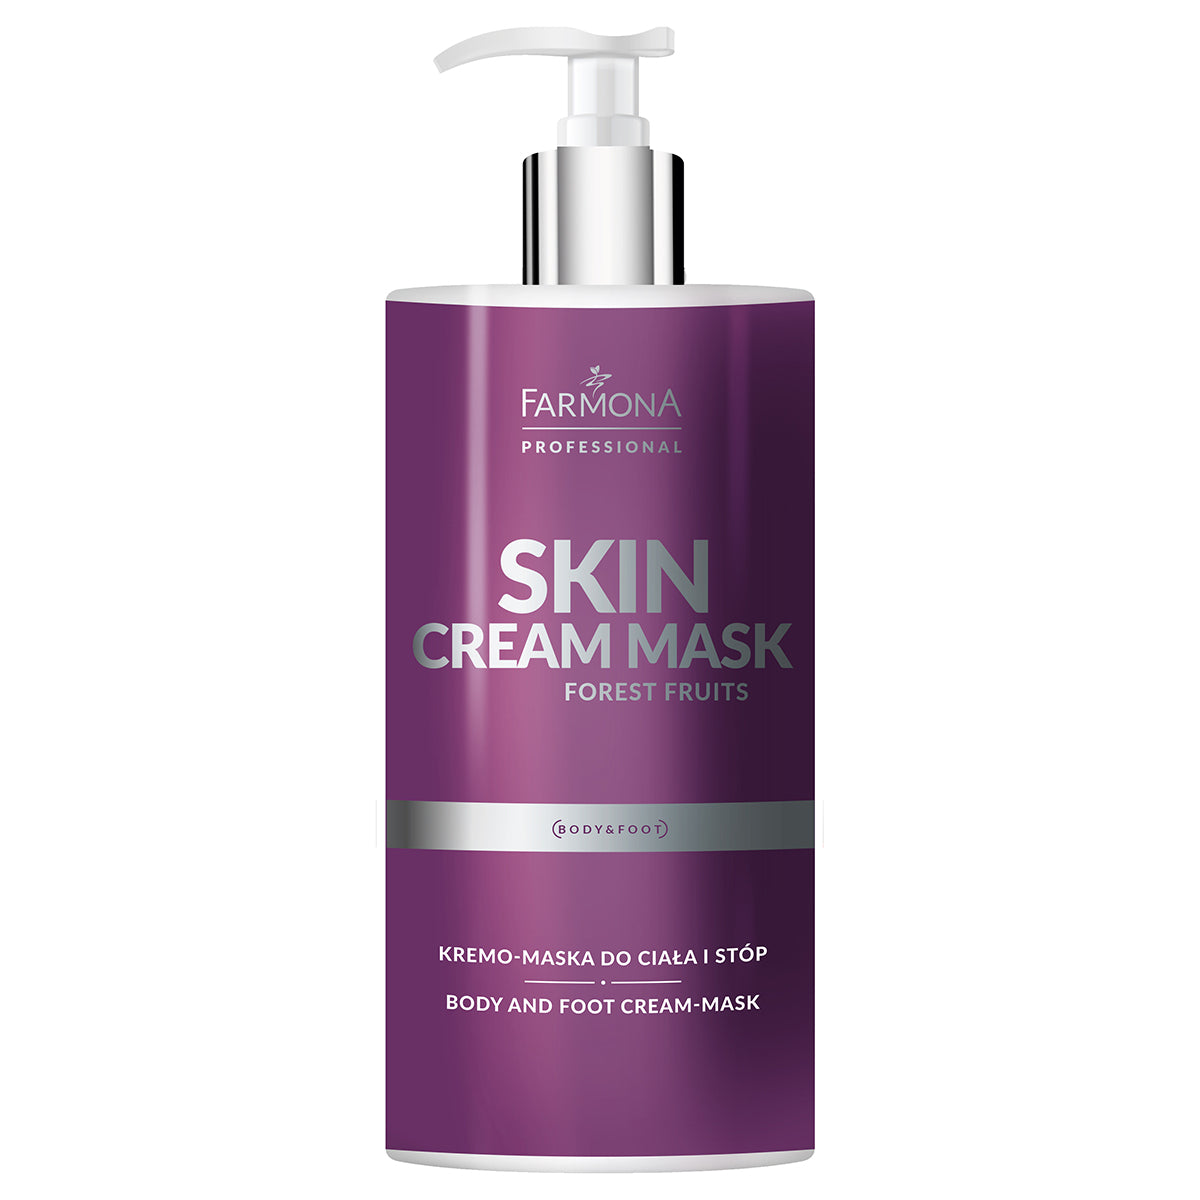 Farmona Professional Skin Cream Mask Forest Fruits Cream - Body & Foot Mask